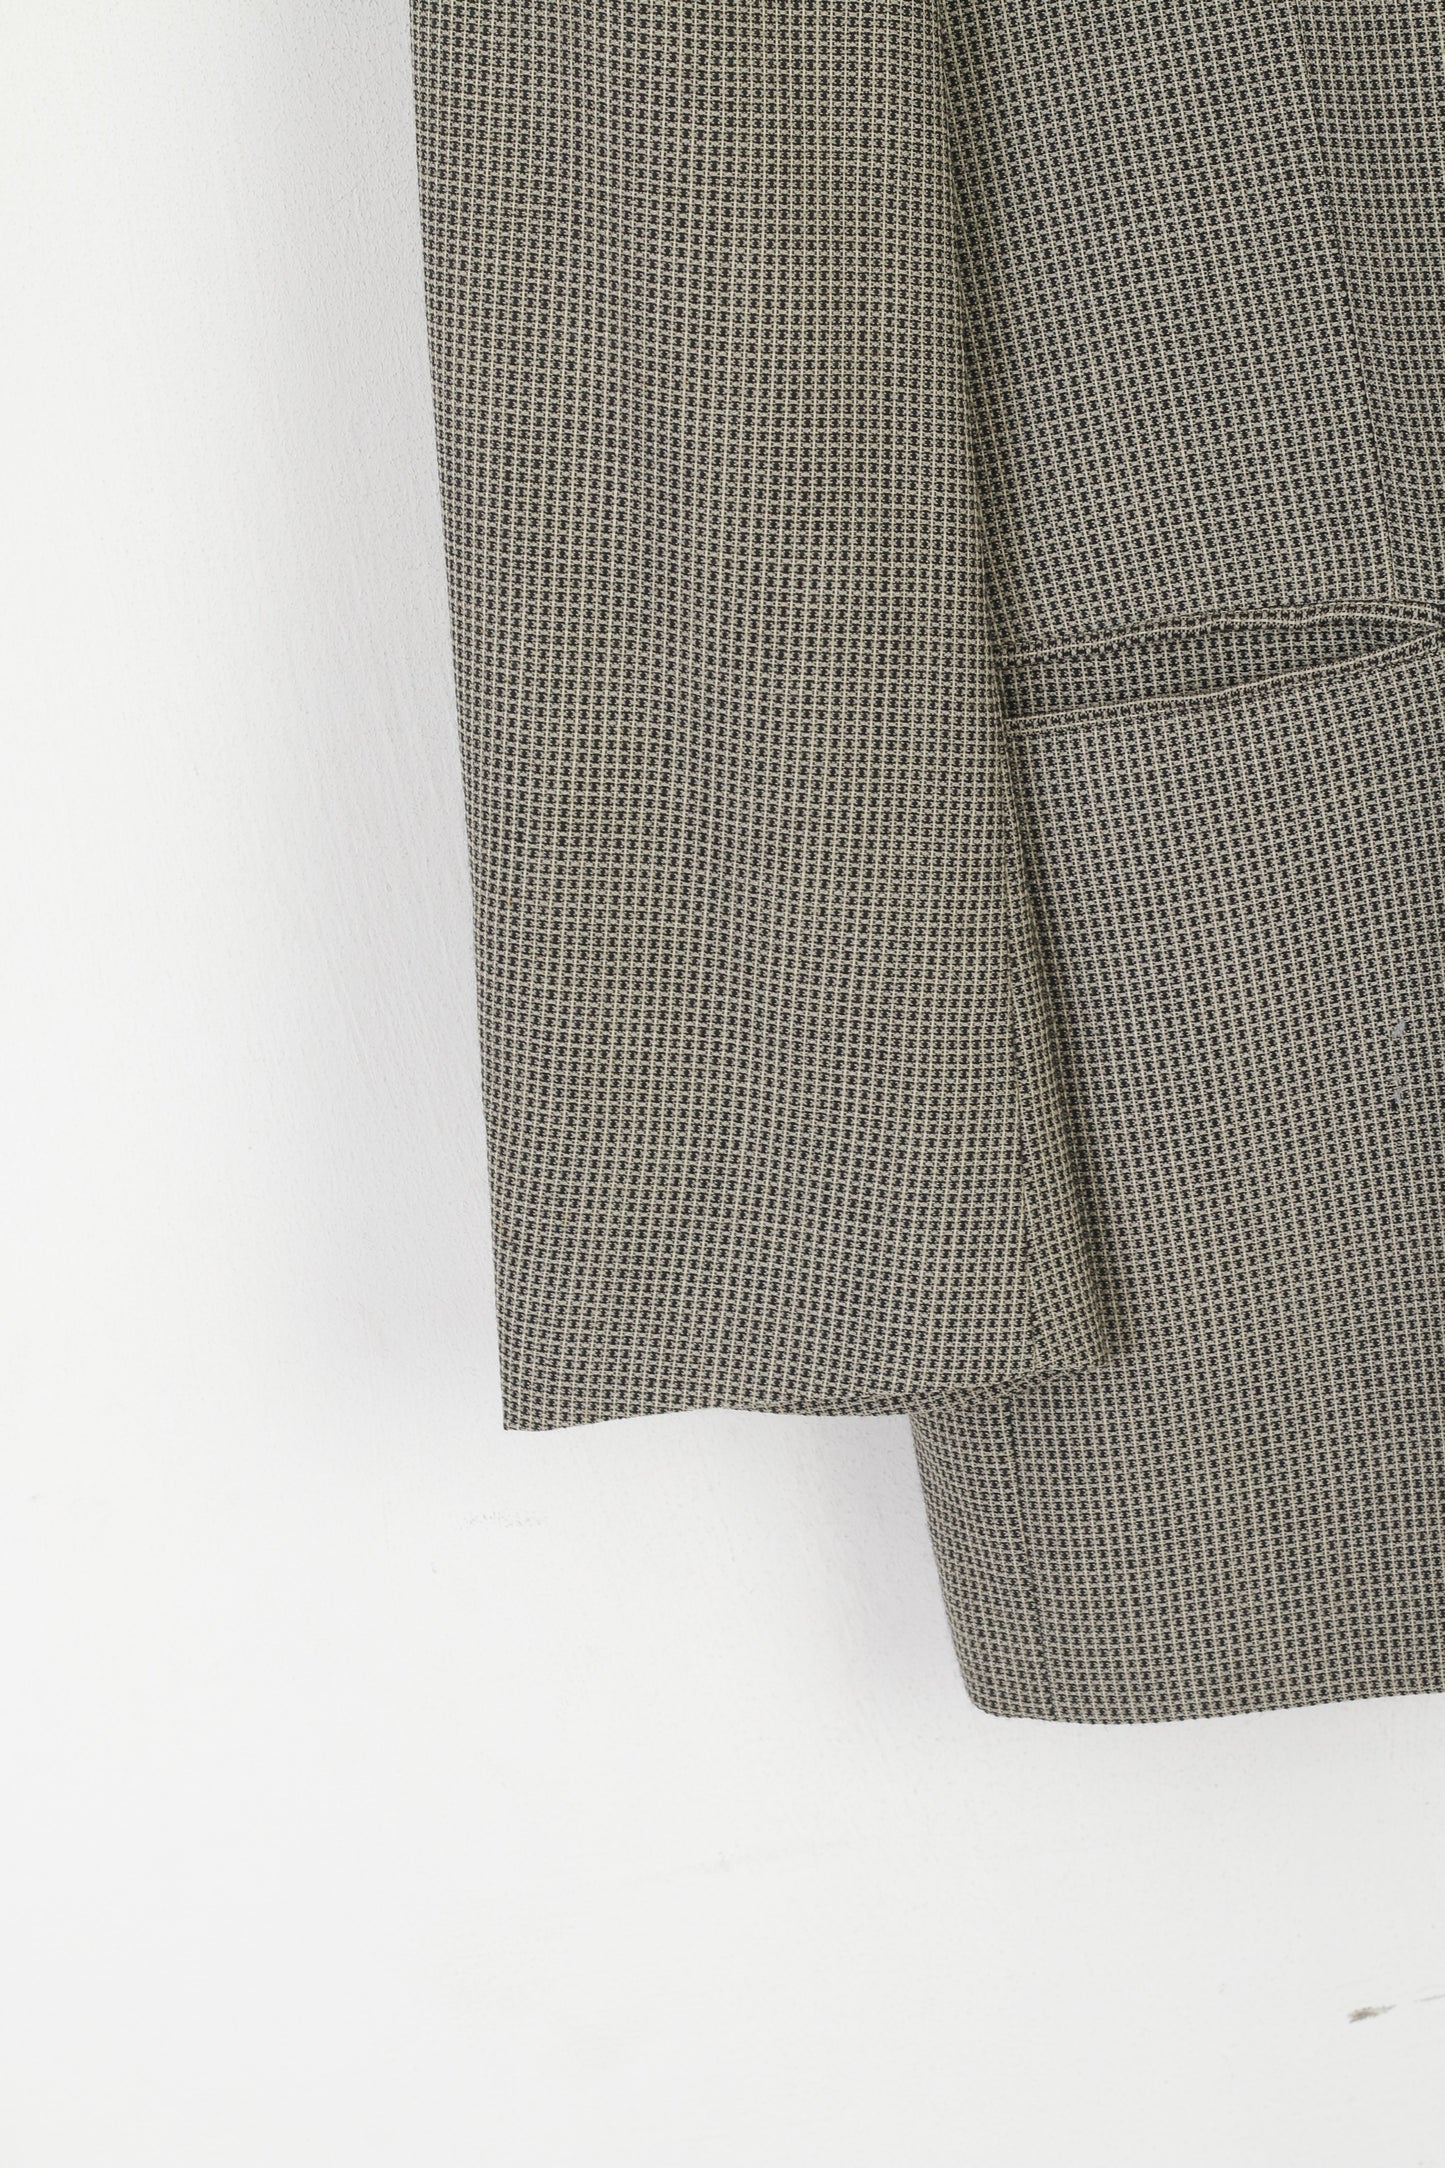 Massimo Datti Men 52 42 Blazer Grey Italy Wool Vintage Micro Check Banero Single Breasted Shoulder Pads Jacket